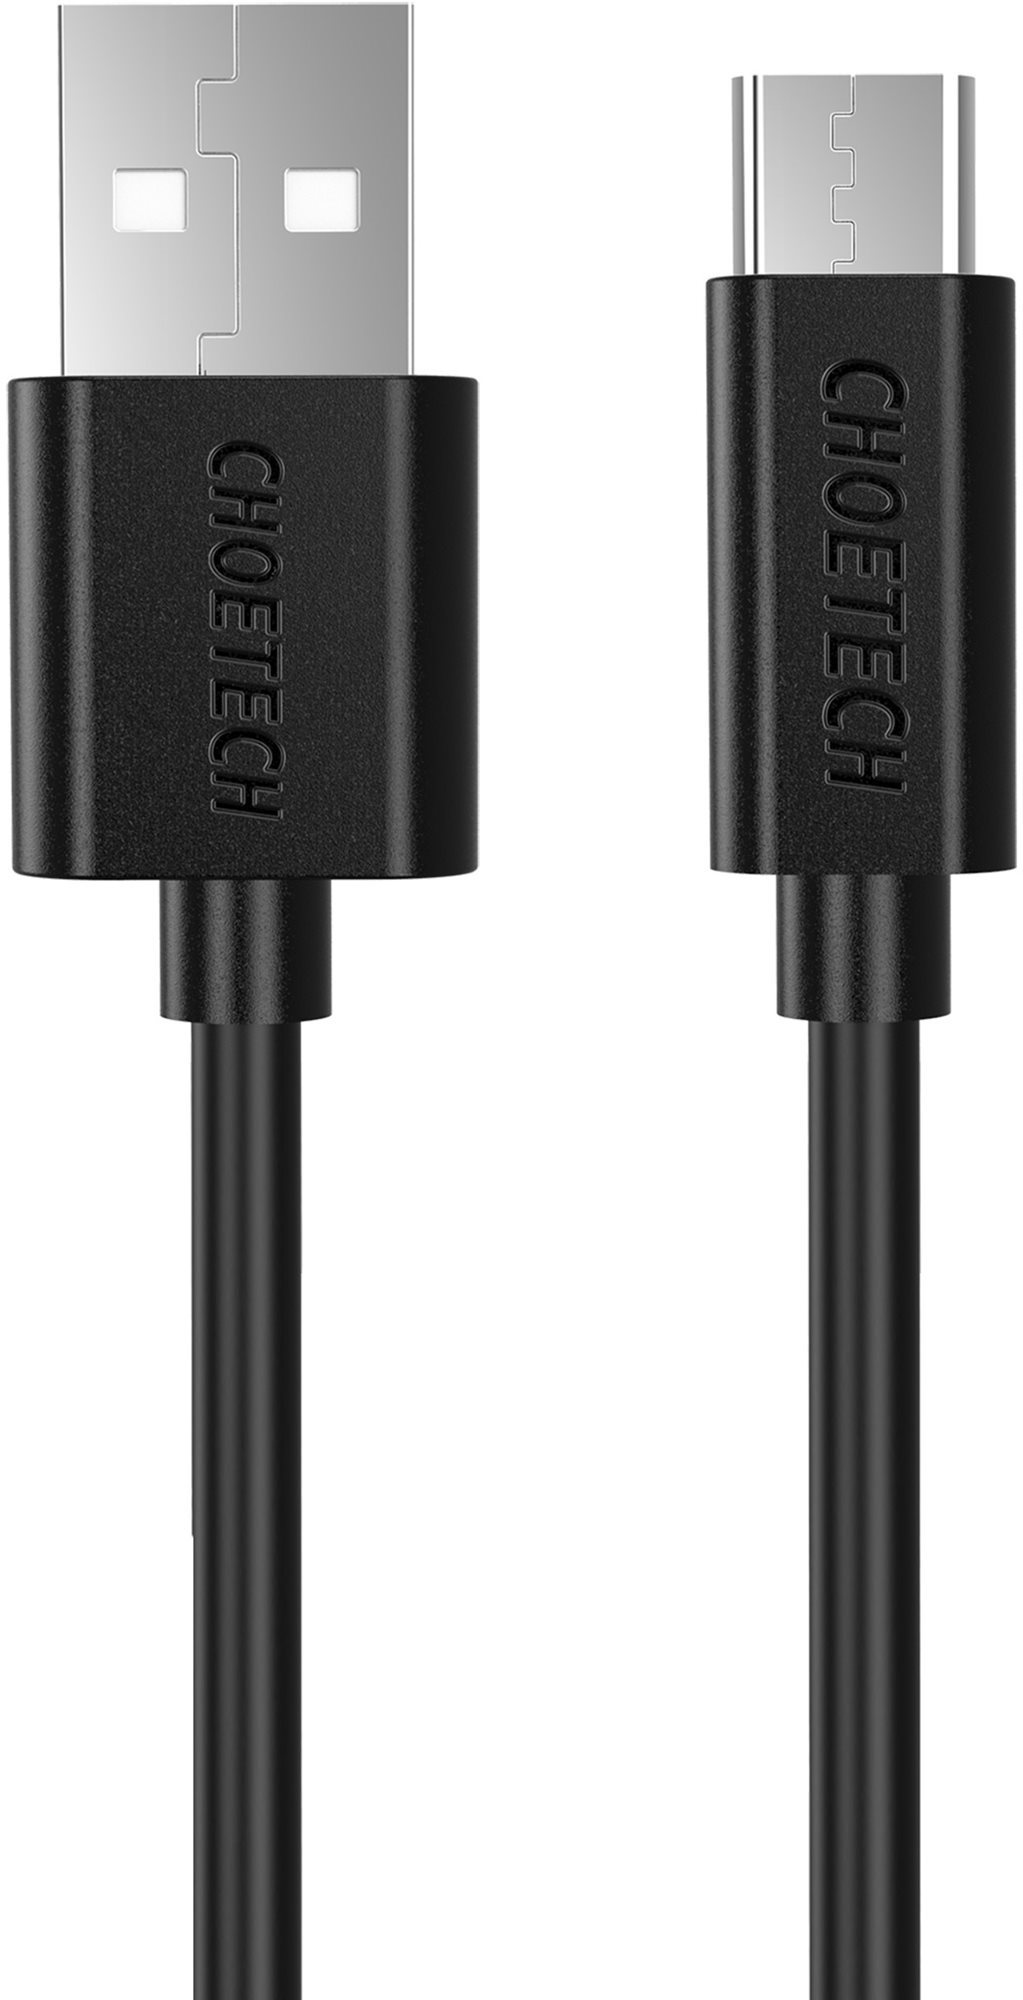 Adatkábel ChoeTech USB-C to USB 2.0 Cable 2m Black